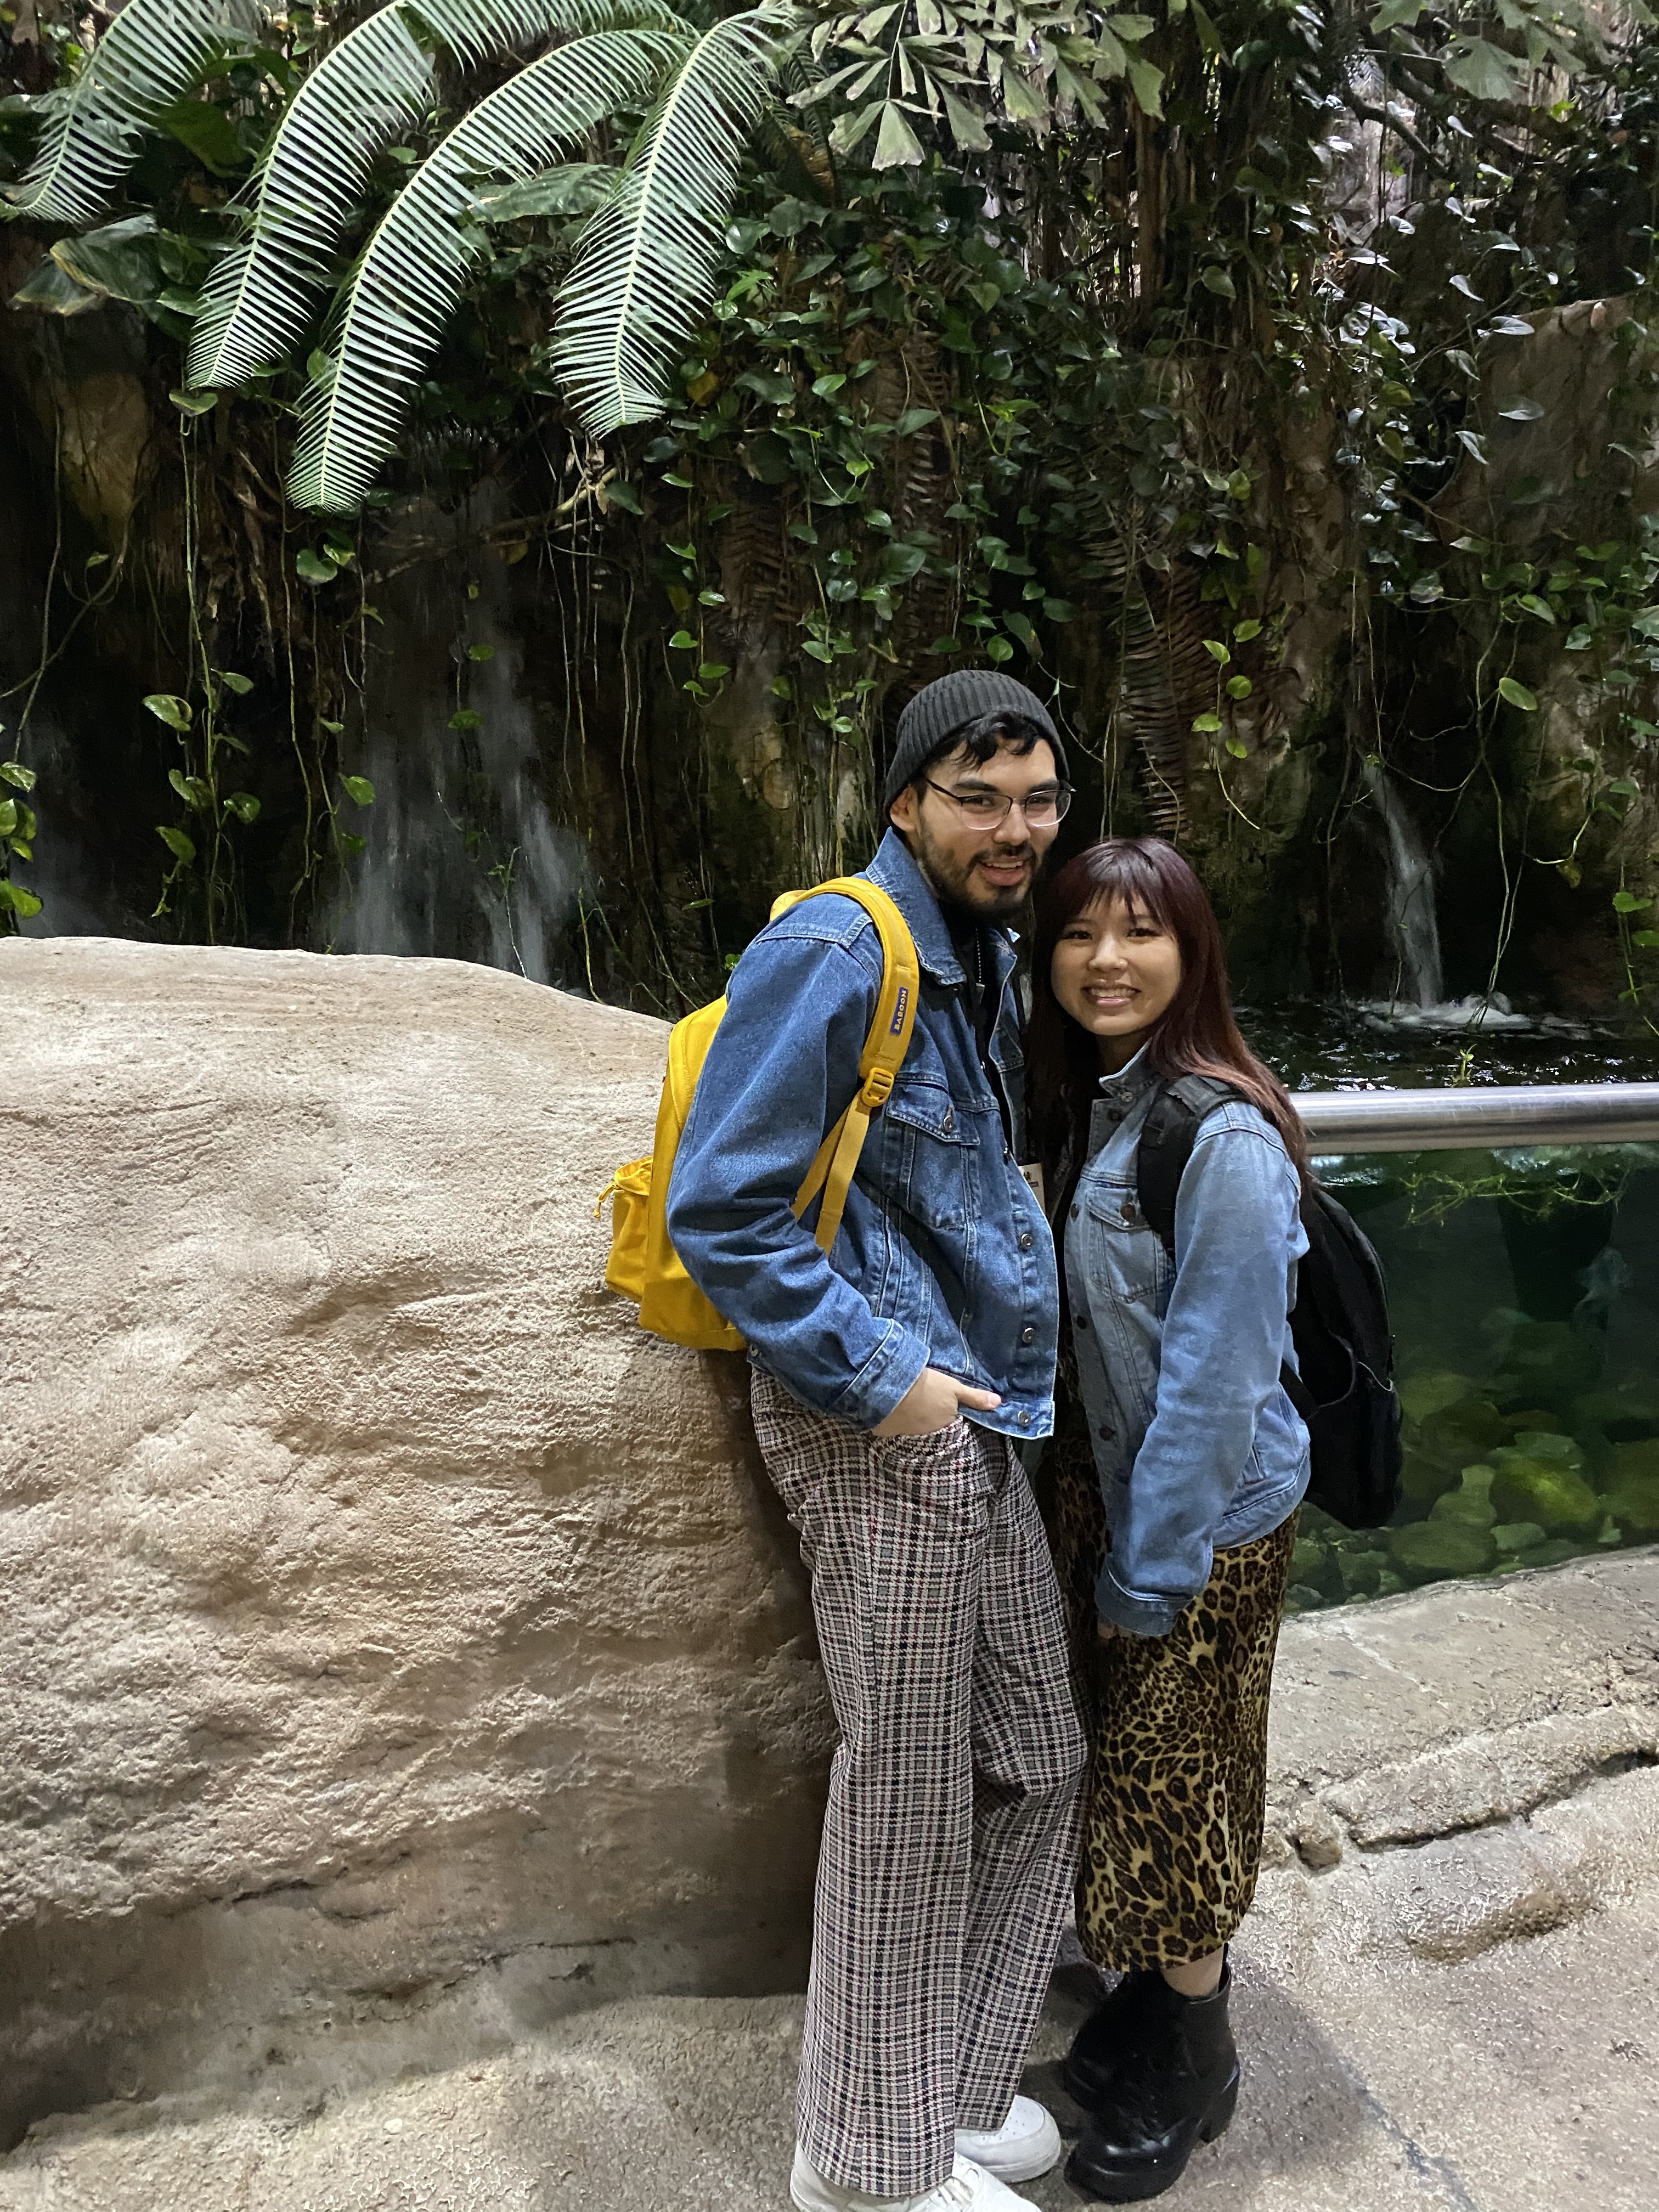 Meghan Nguyen and Rolando Hernandez pose for a picture together